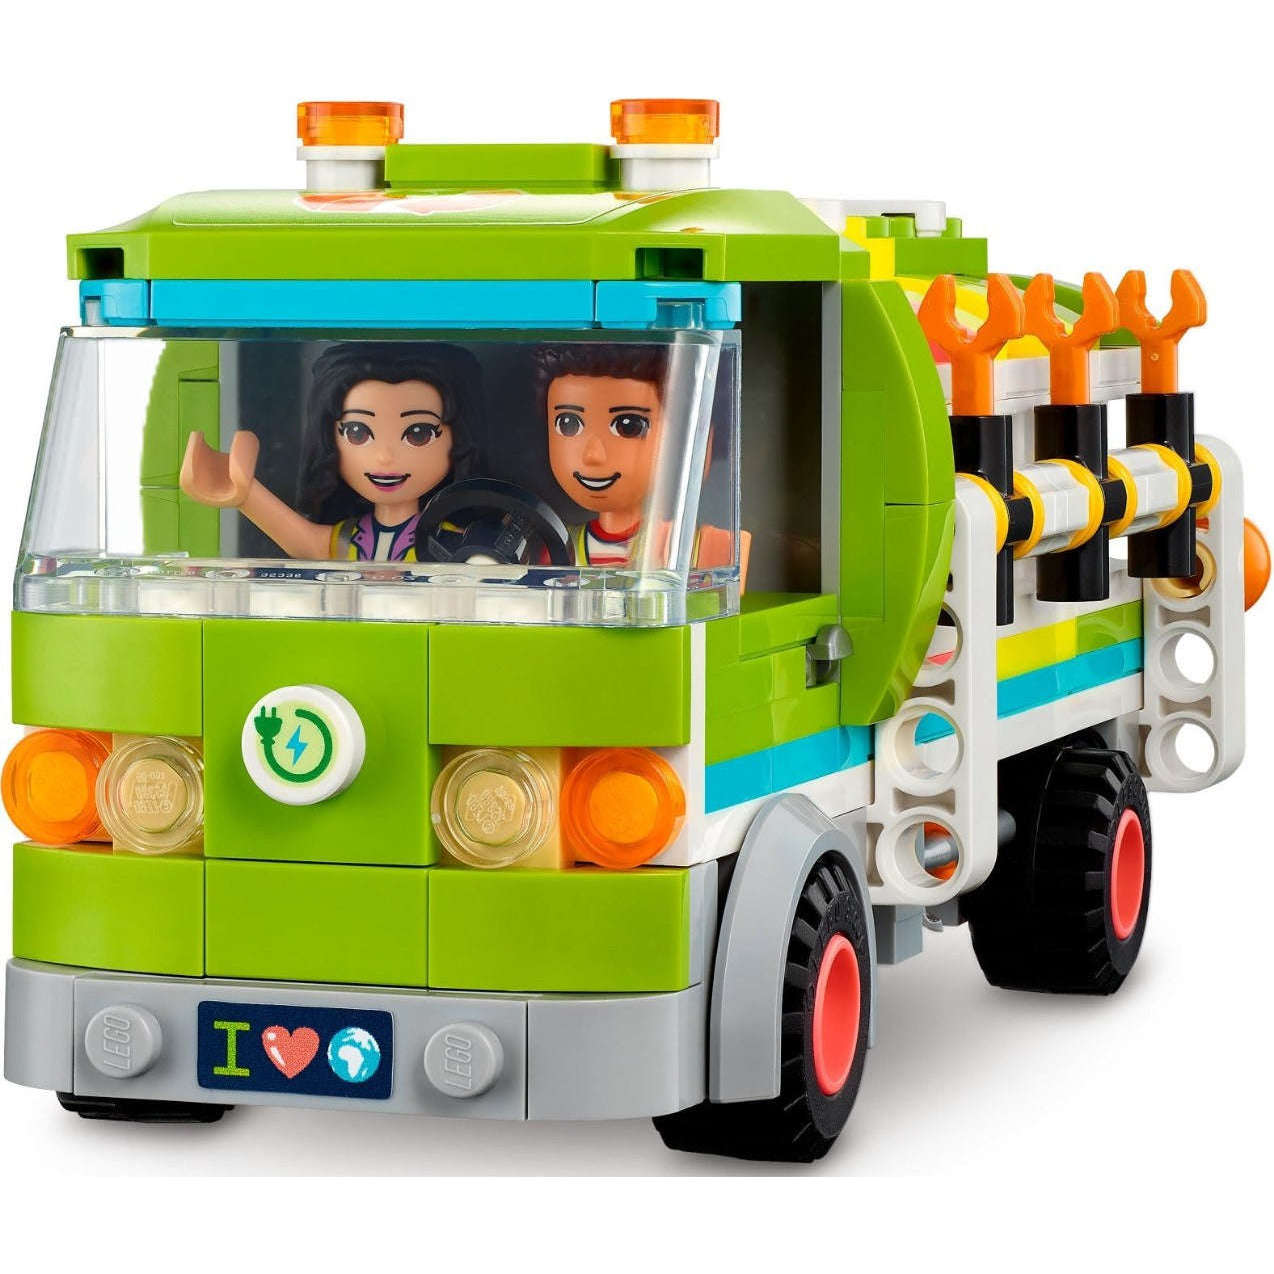 Lego 41712 Friends Recycling Truck